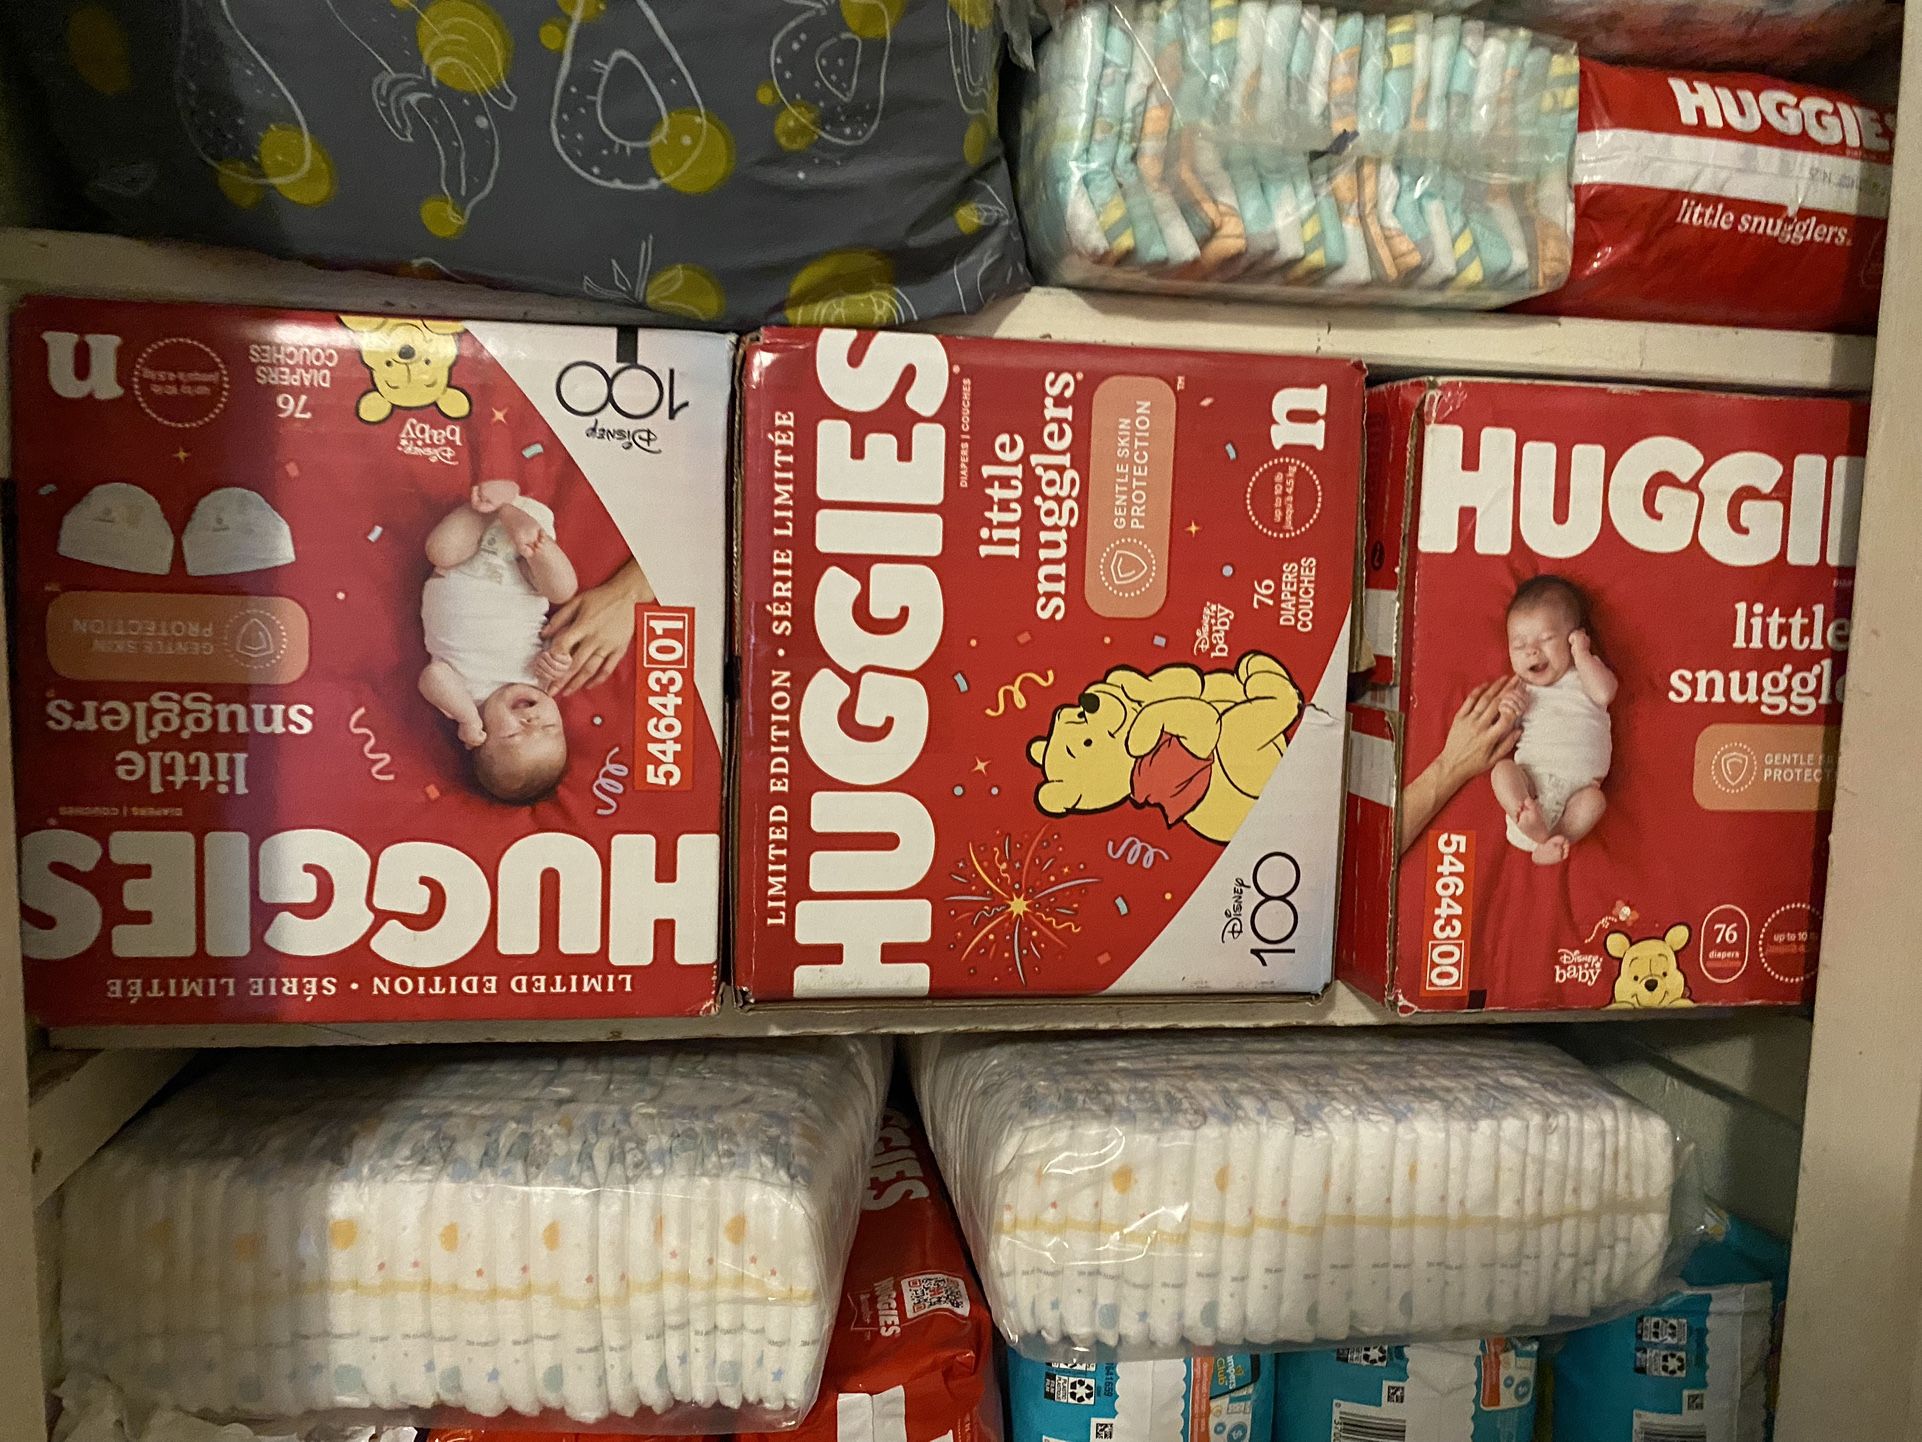 Huggies Little Snugglers 